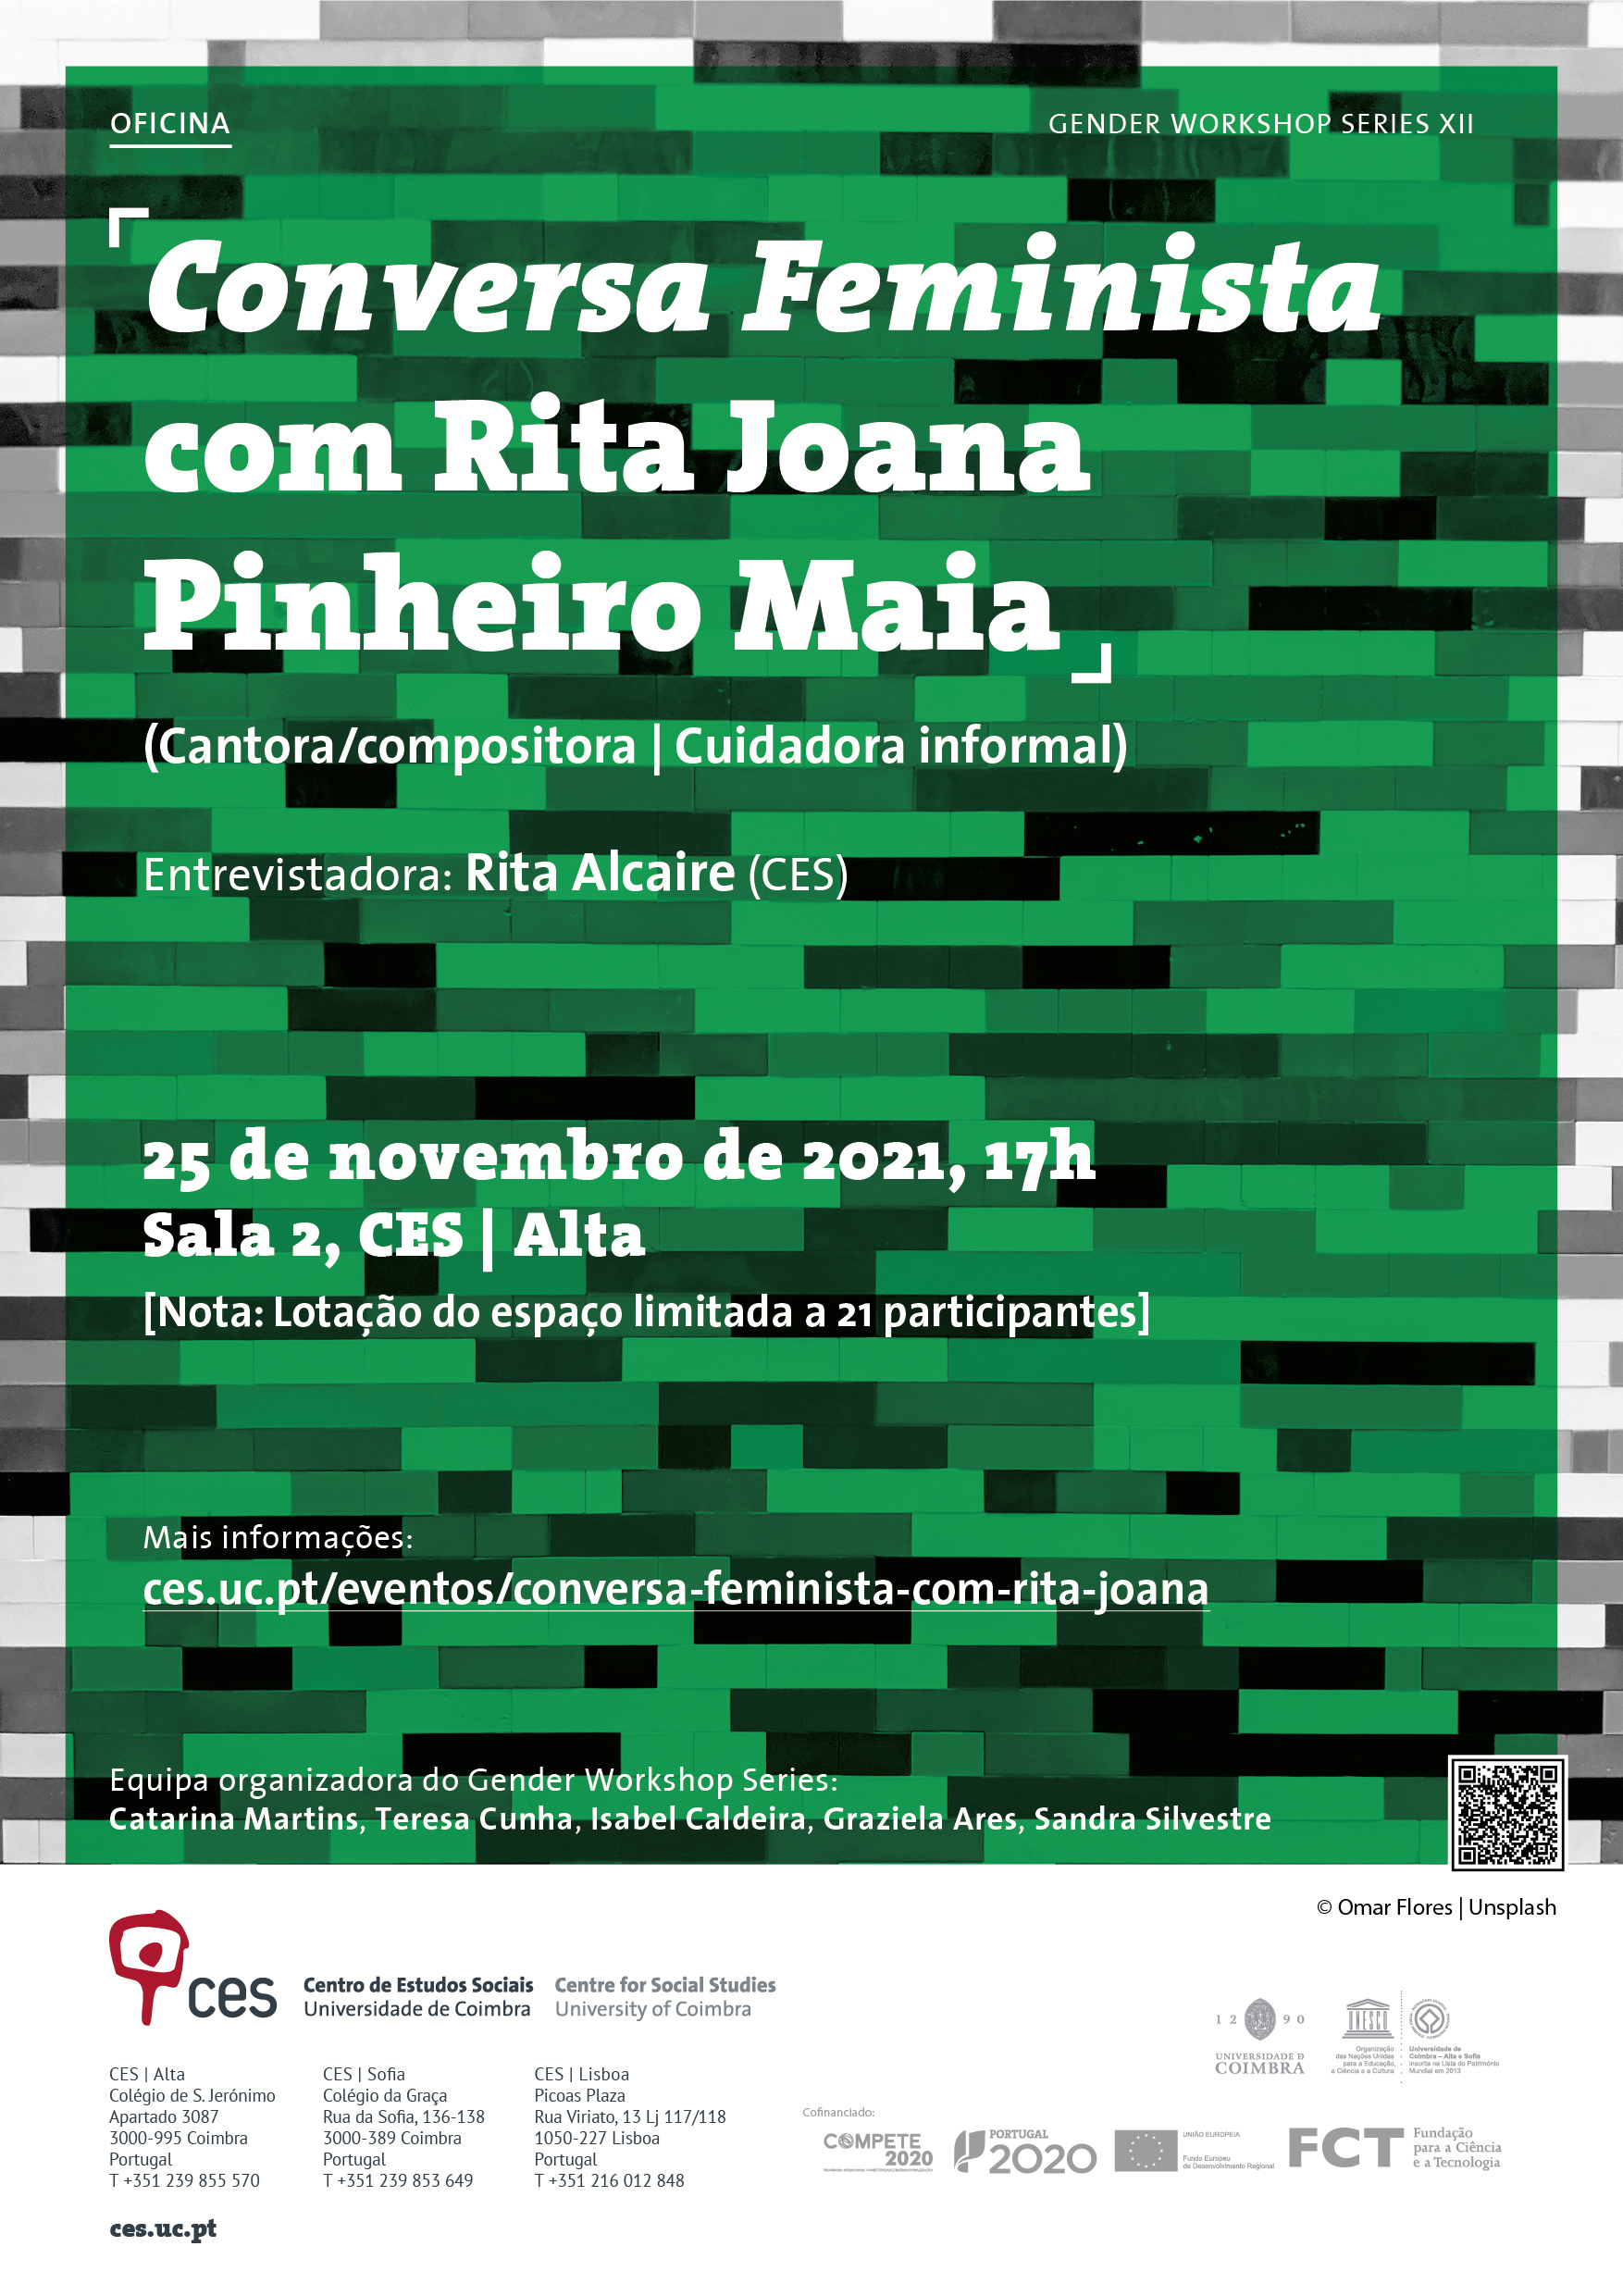 <em>Feminist Talk</em> with Rita Joana Pinheiro Maia<span id="edit_35864"><script>$(function() { $('#edit_35864').load( "/myces/user/editobj.php?tipo=evento&id=35864" ); });</script></span>